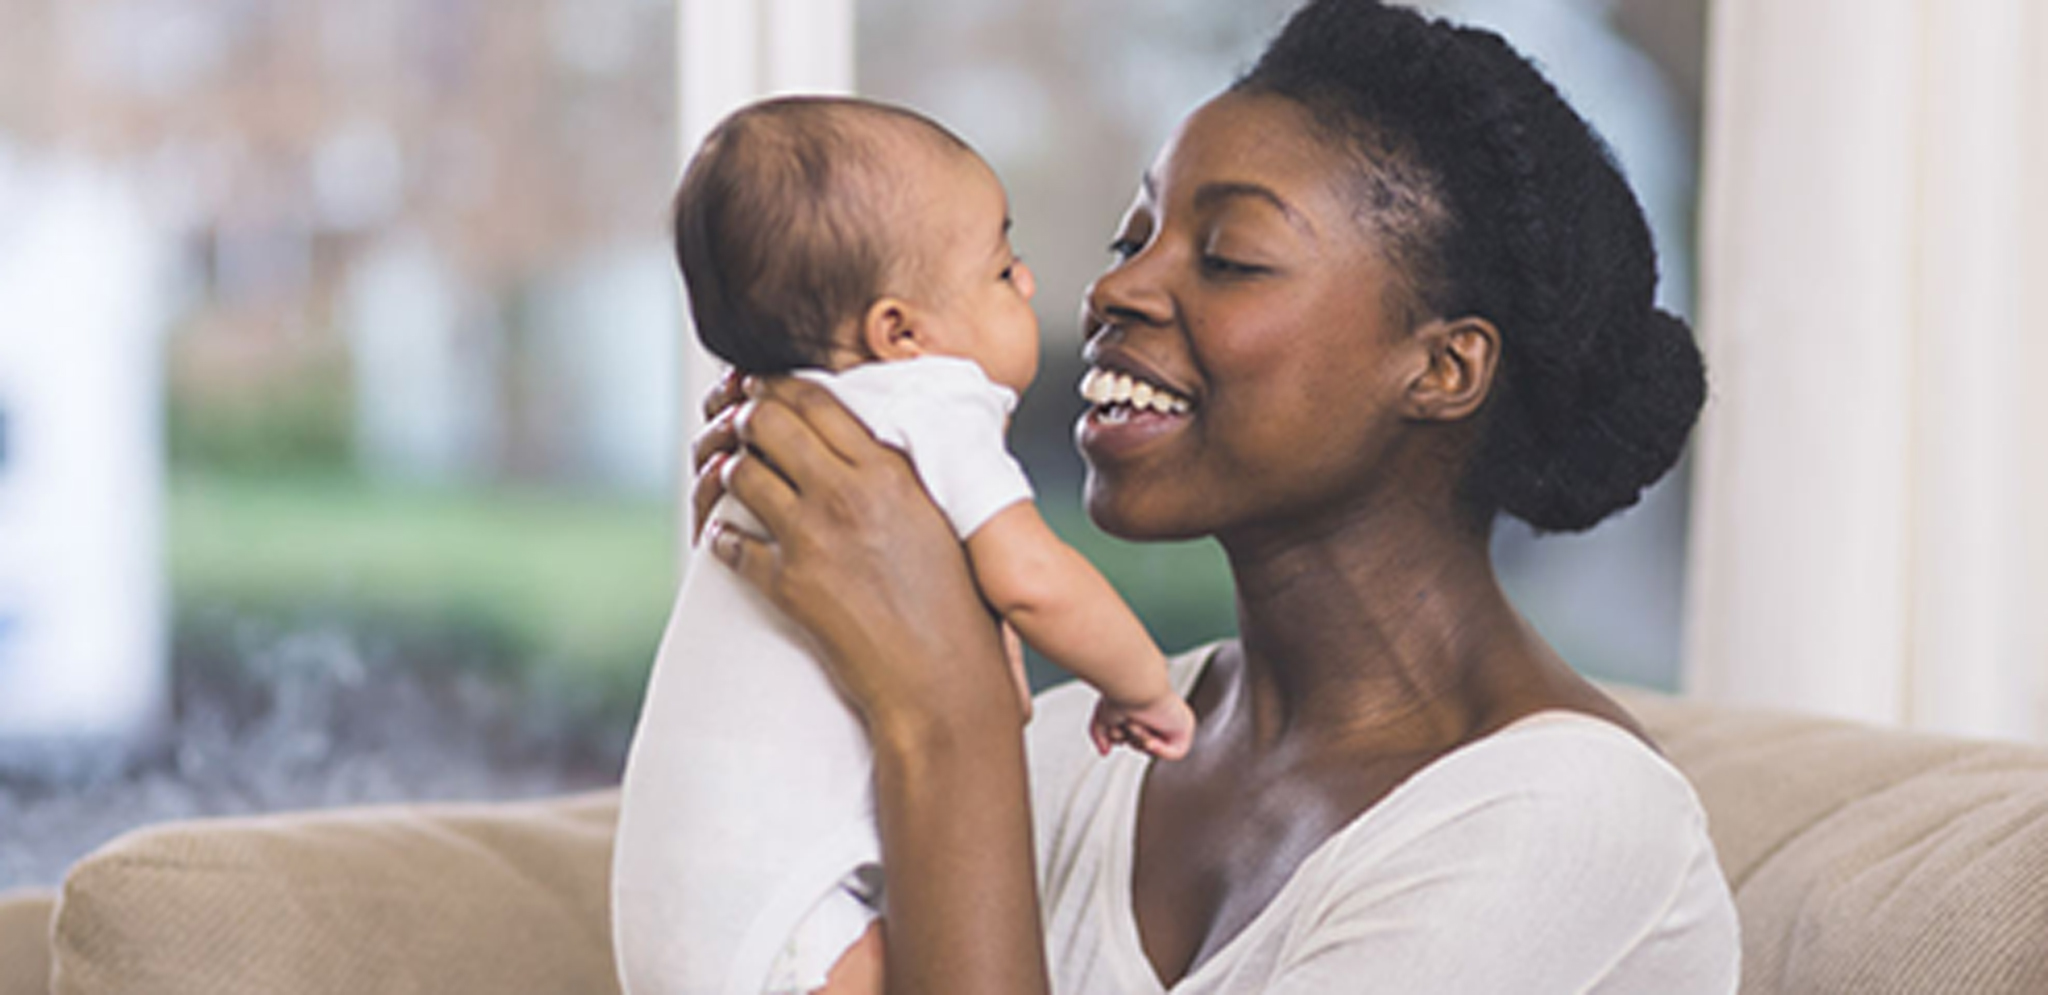 World Breastfeeding Week 2022: Ways to prevent sagging breasts